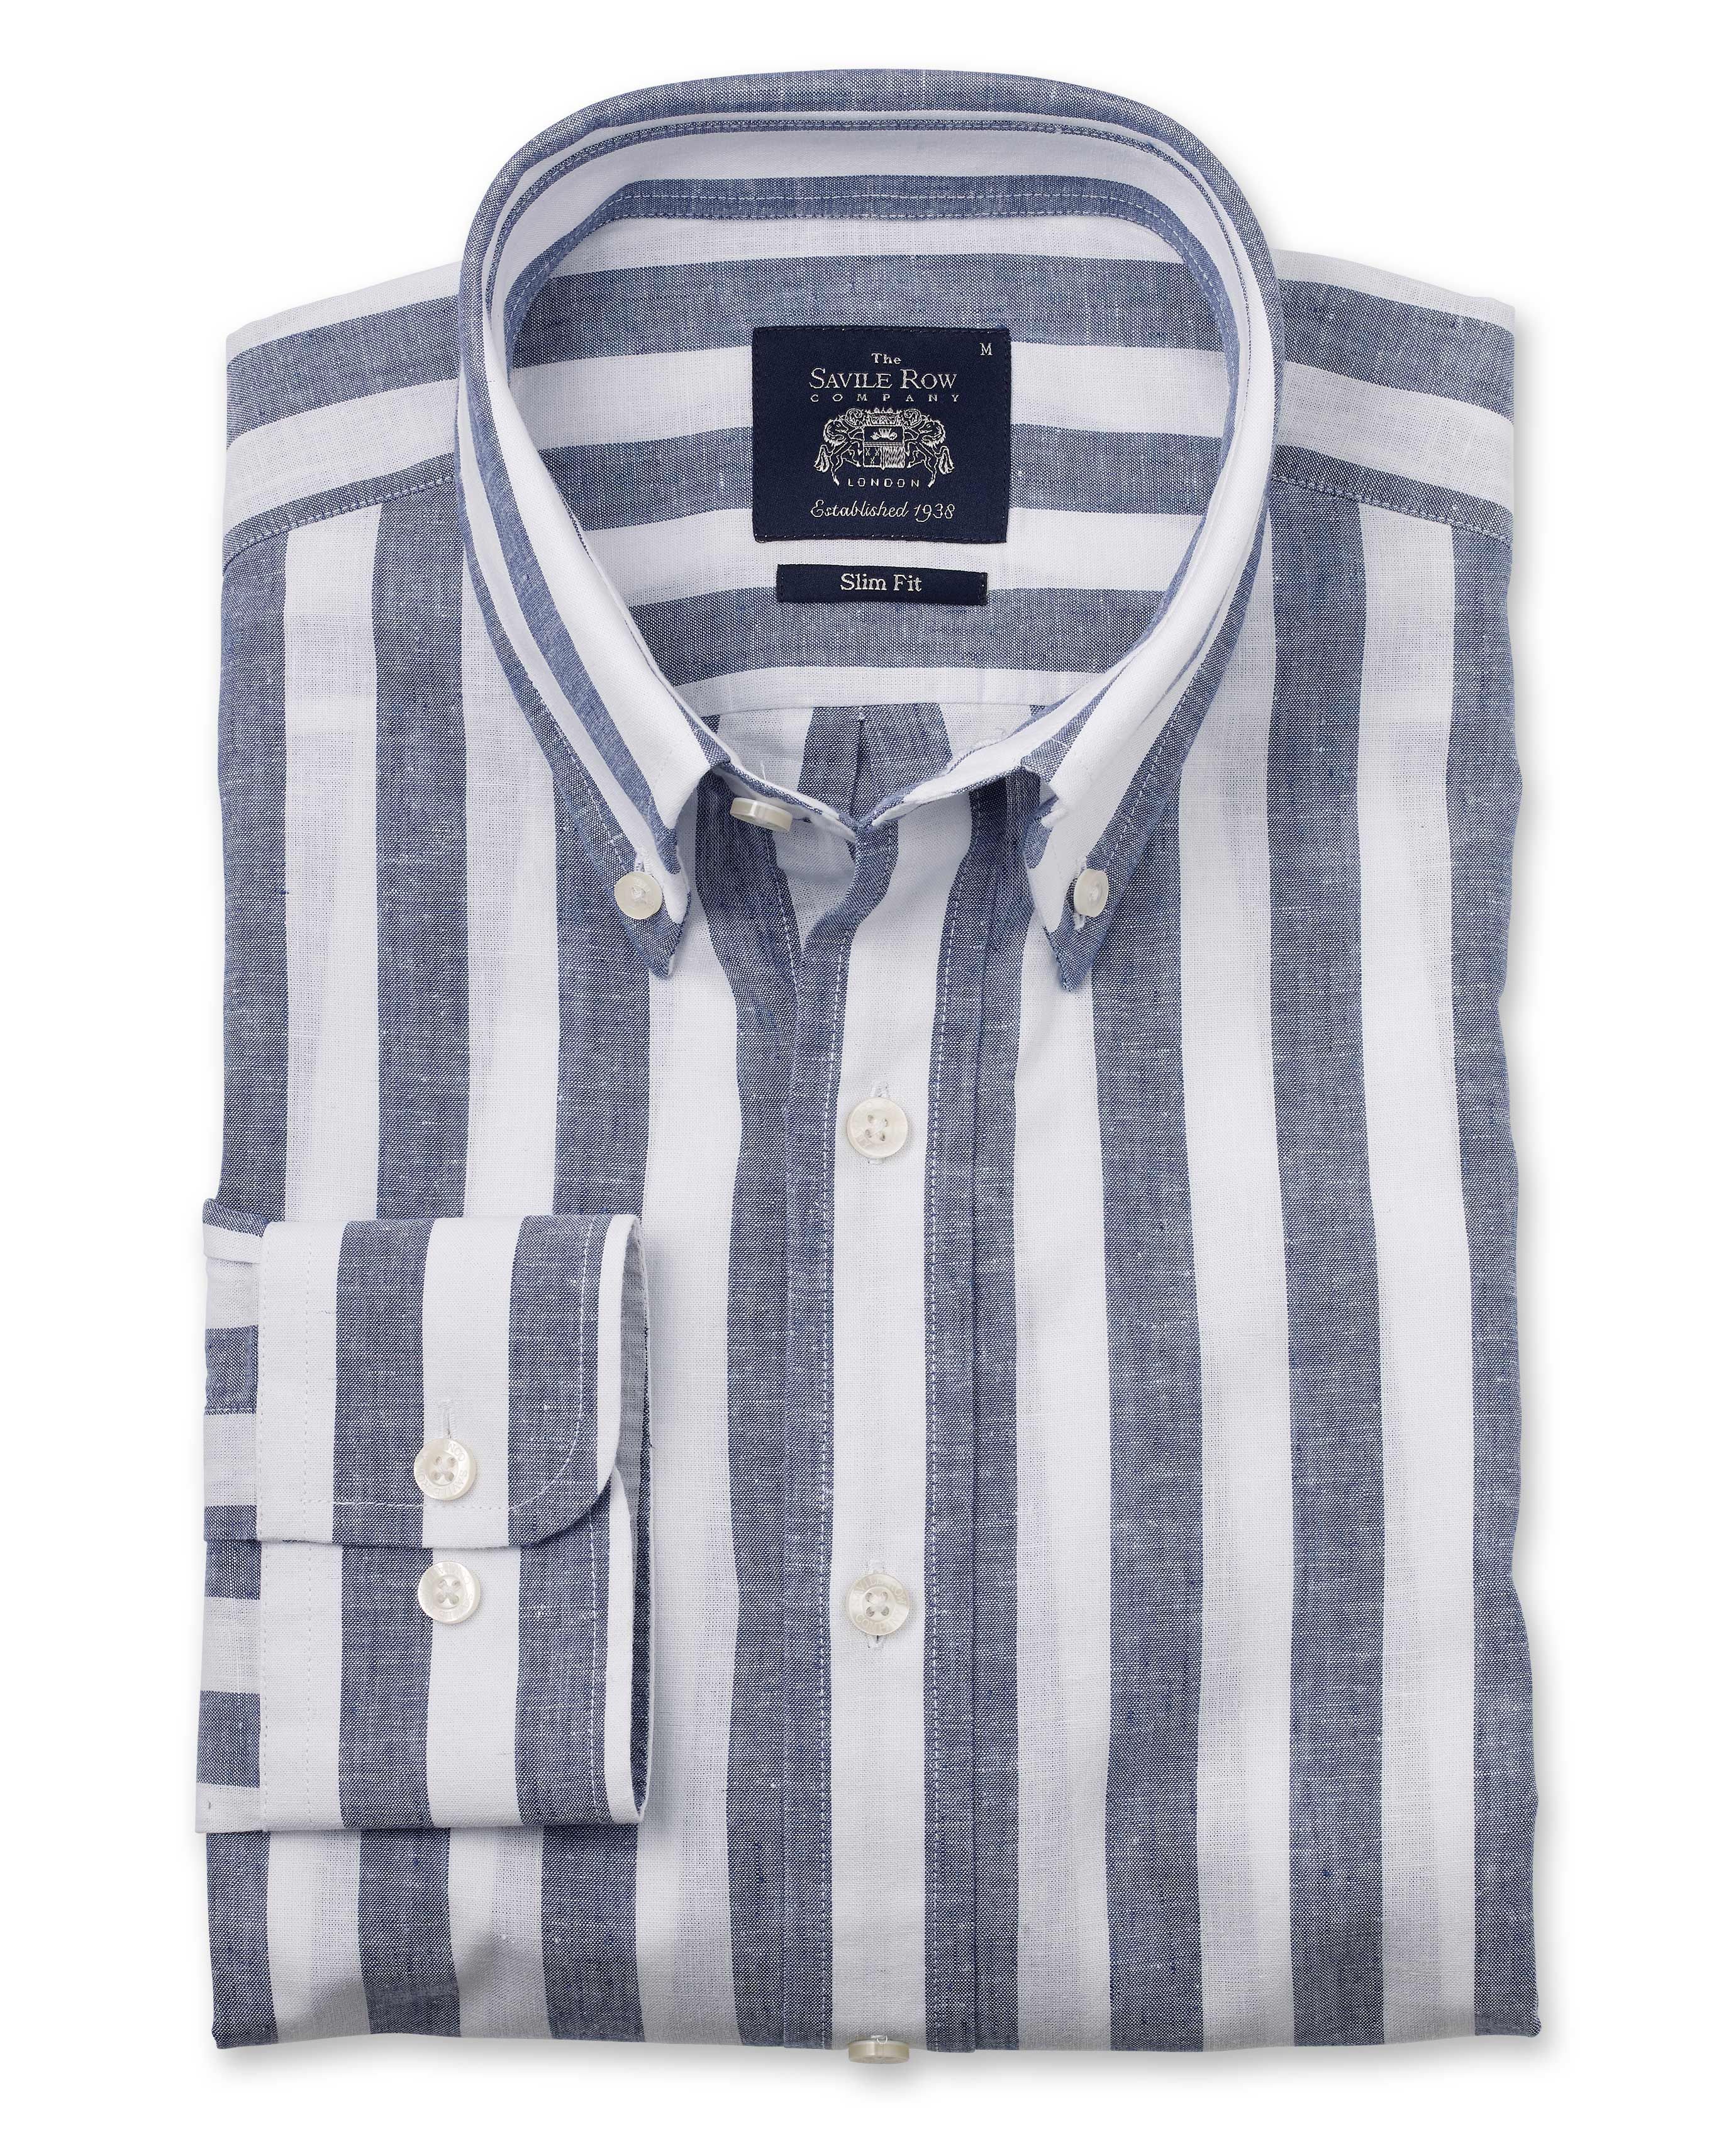 https://savilerowco.com/media/catalog/product/cache/2accacfcf7bc449eee367fe2319d84b6/n/a/navy-white-wide-stripe-linen-blend-slim-fit-button-down-casual-shirt-1160whn_1.jpg